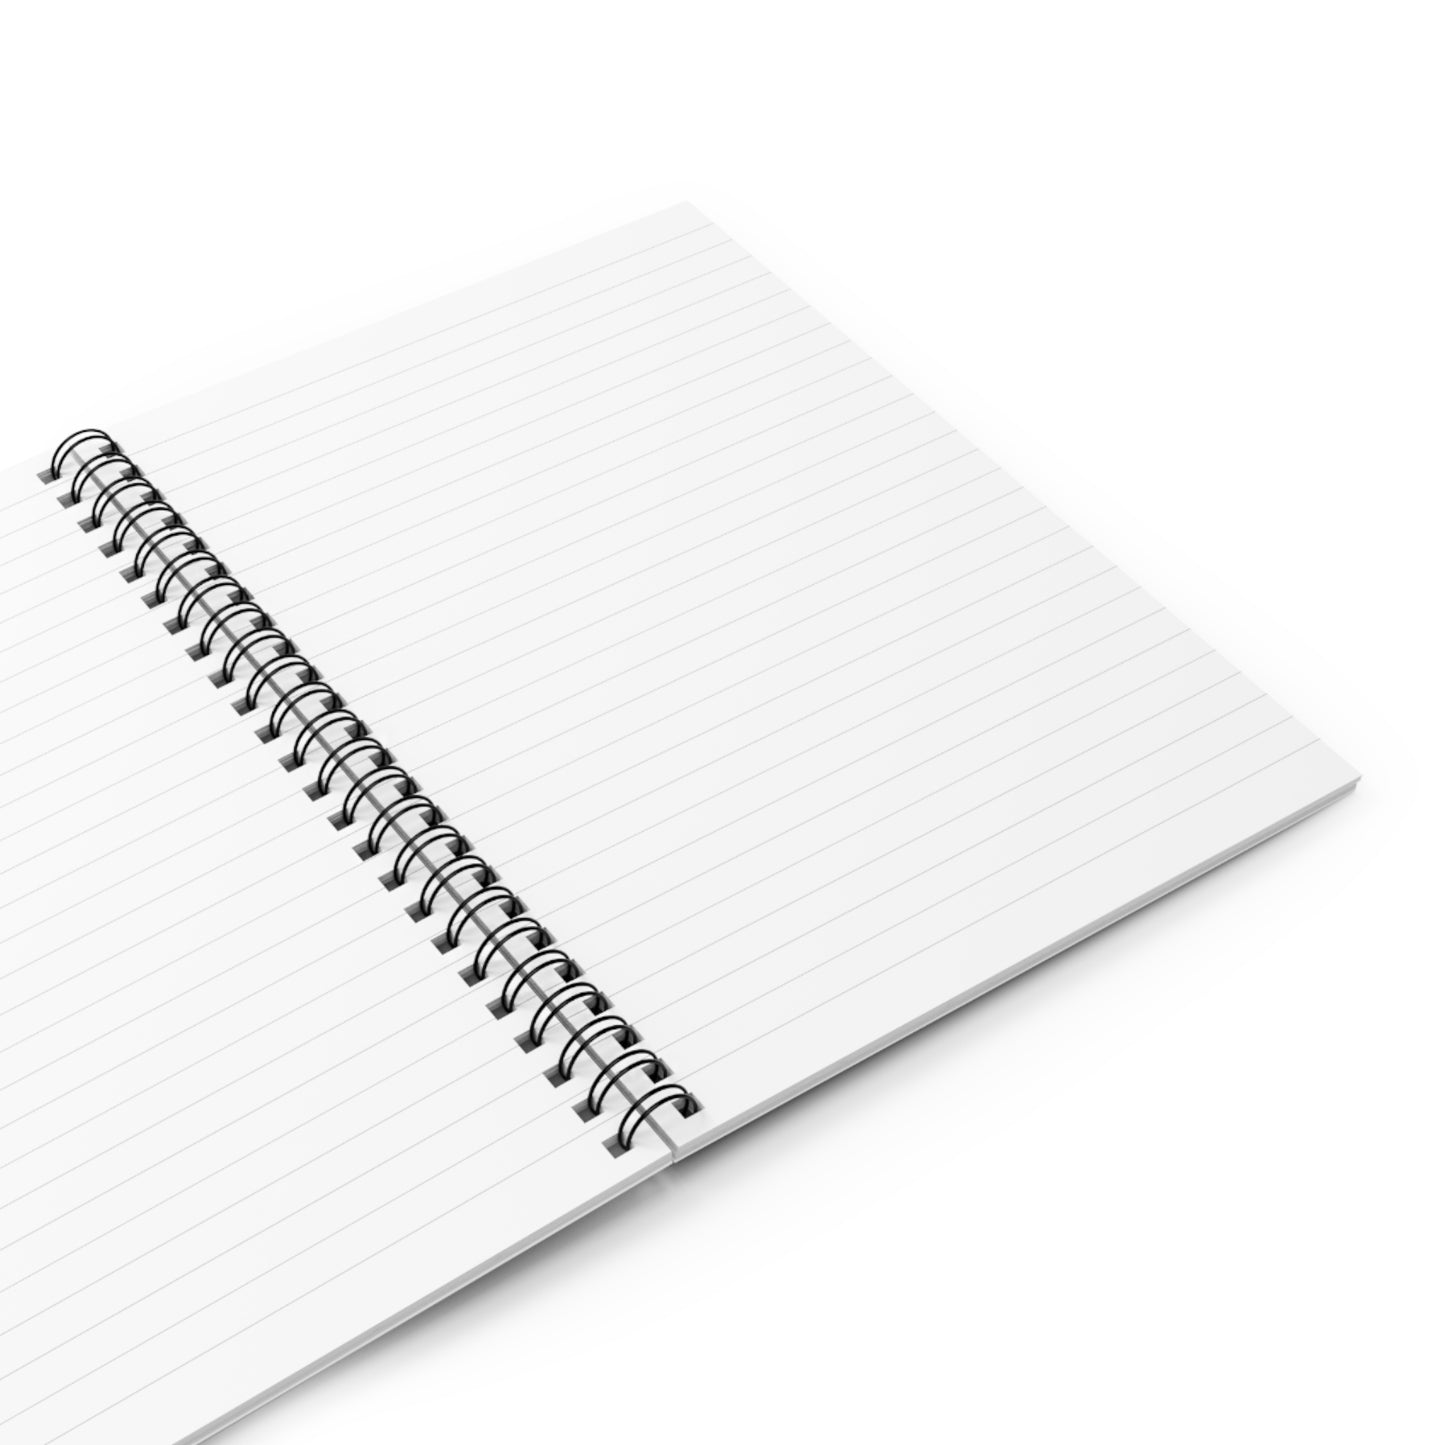 Rita - Ruled Line Notebook